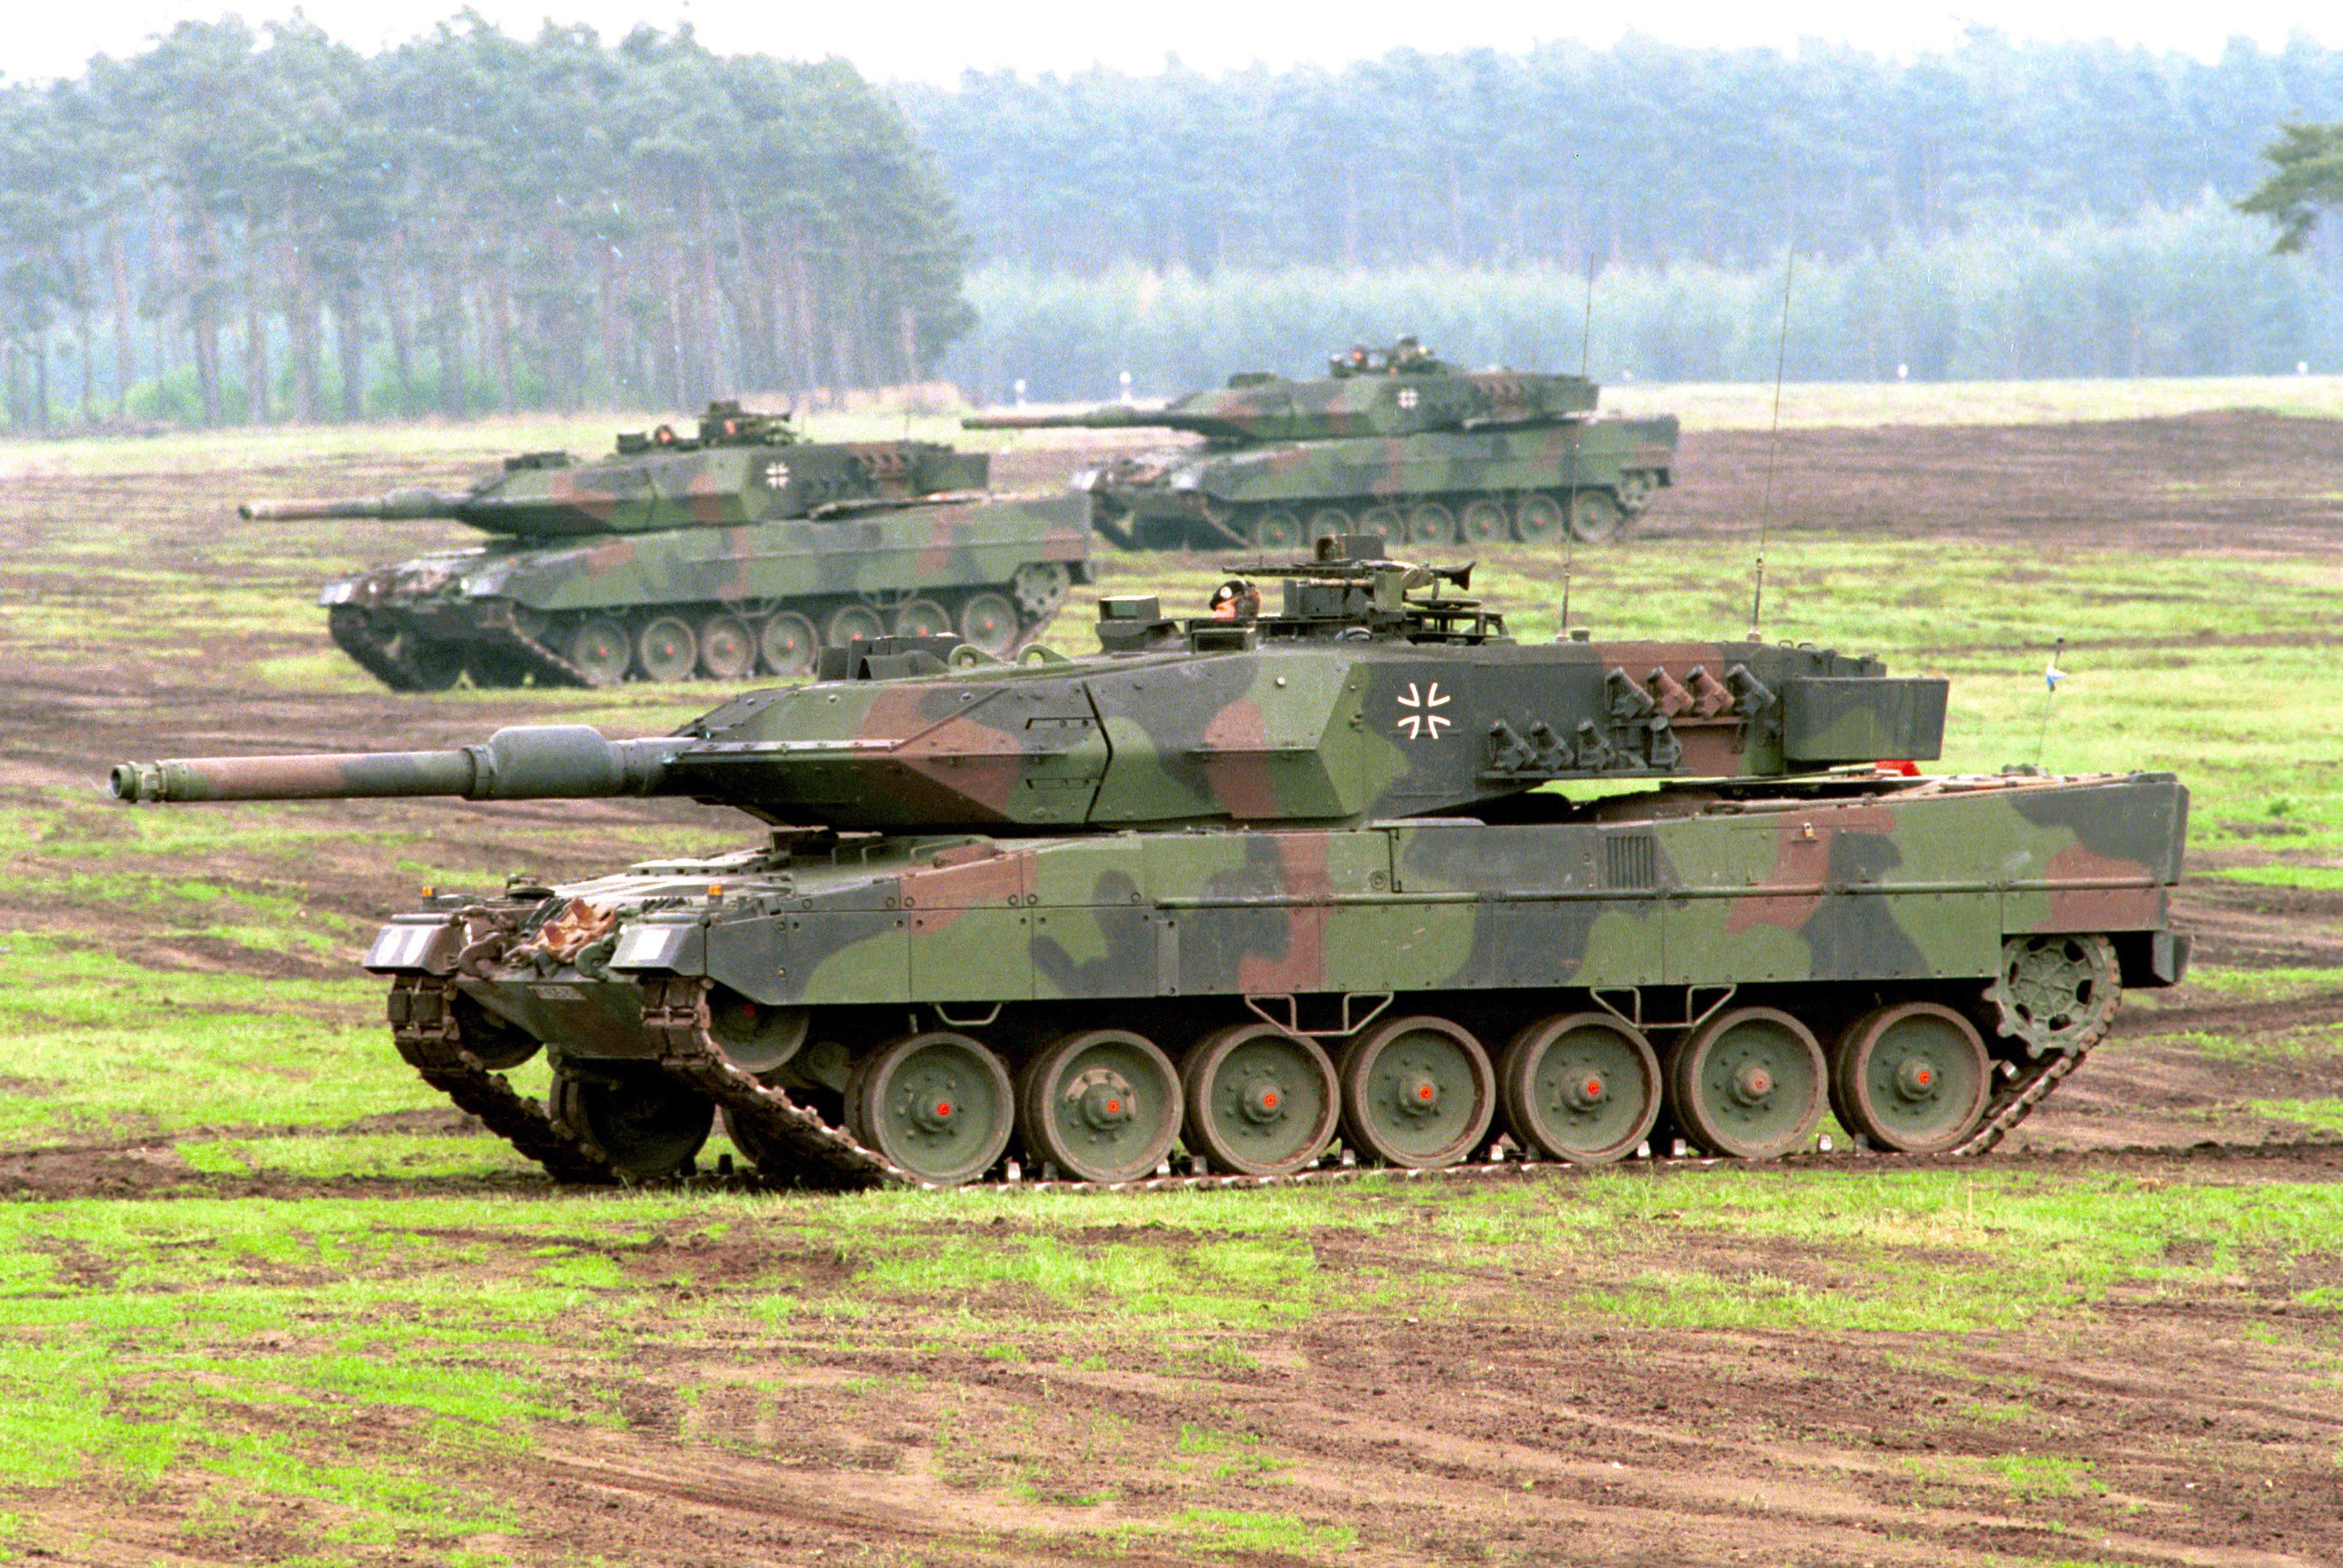 Main battle tank - Wikipedia